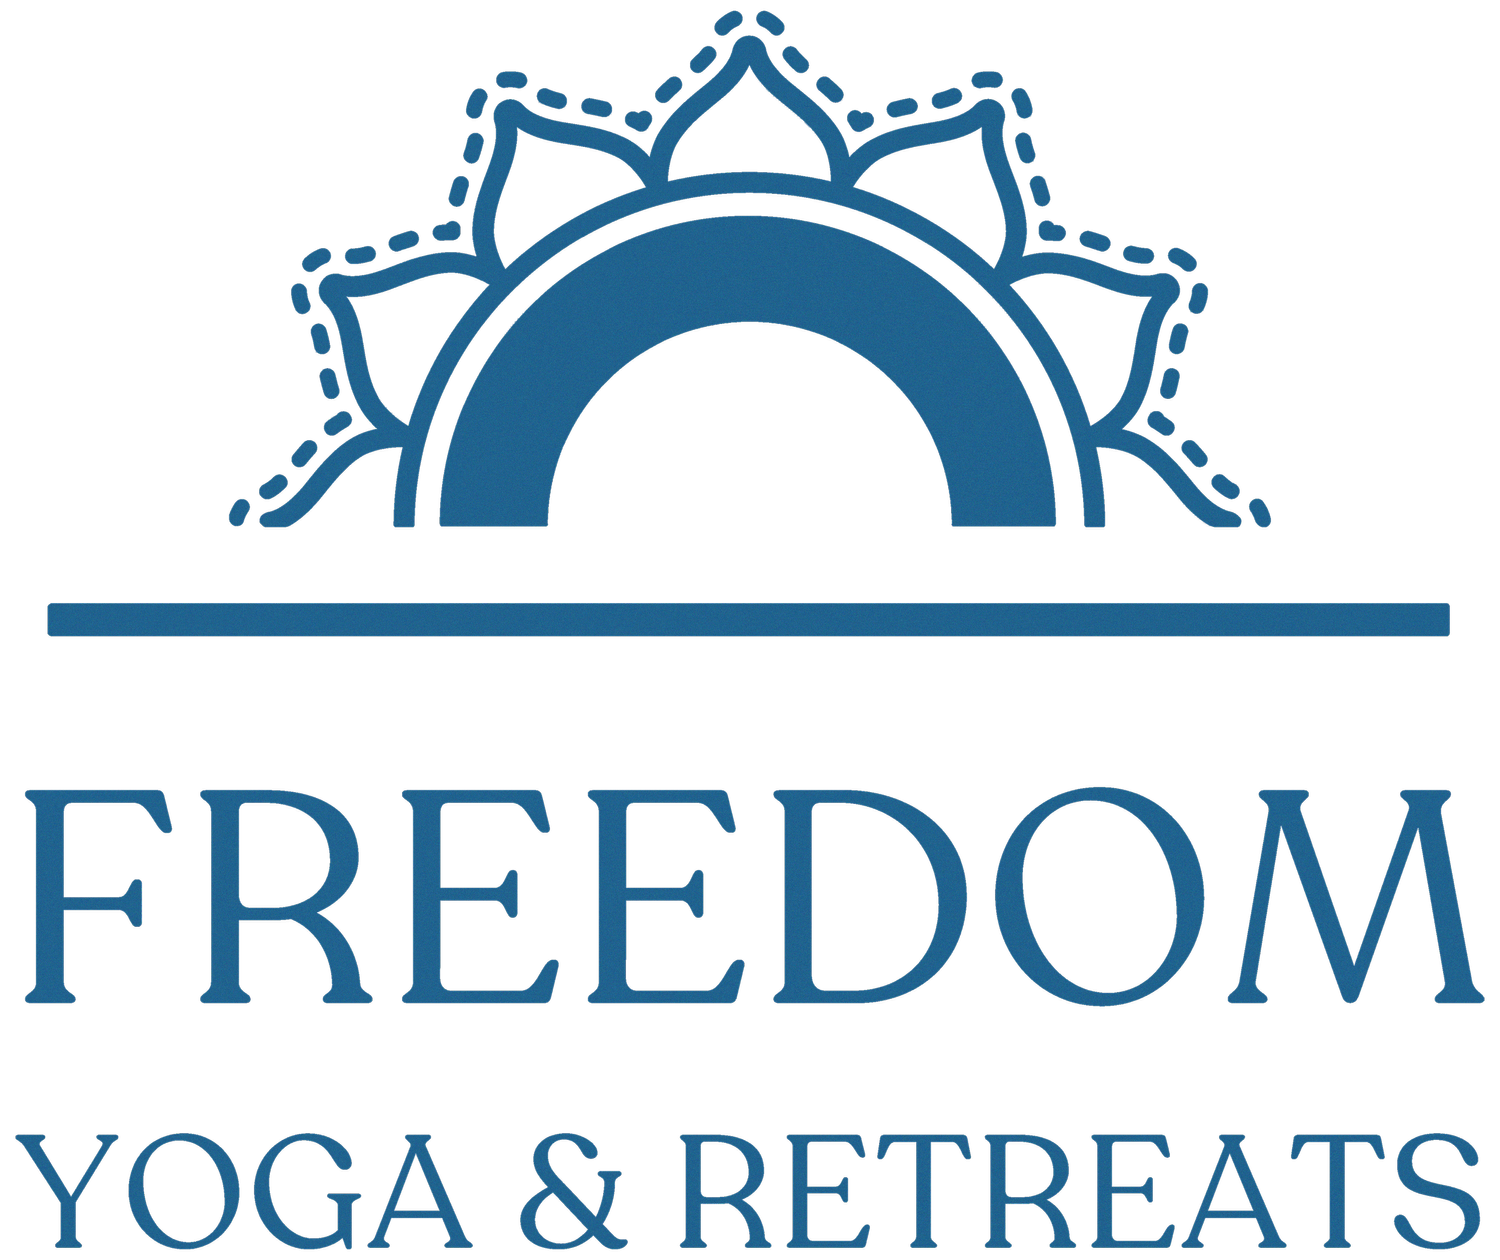 Freedom Yoga